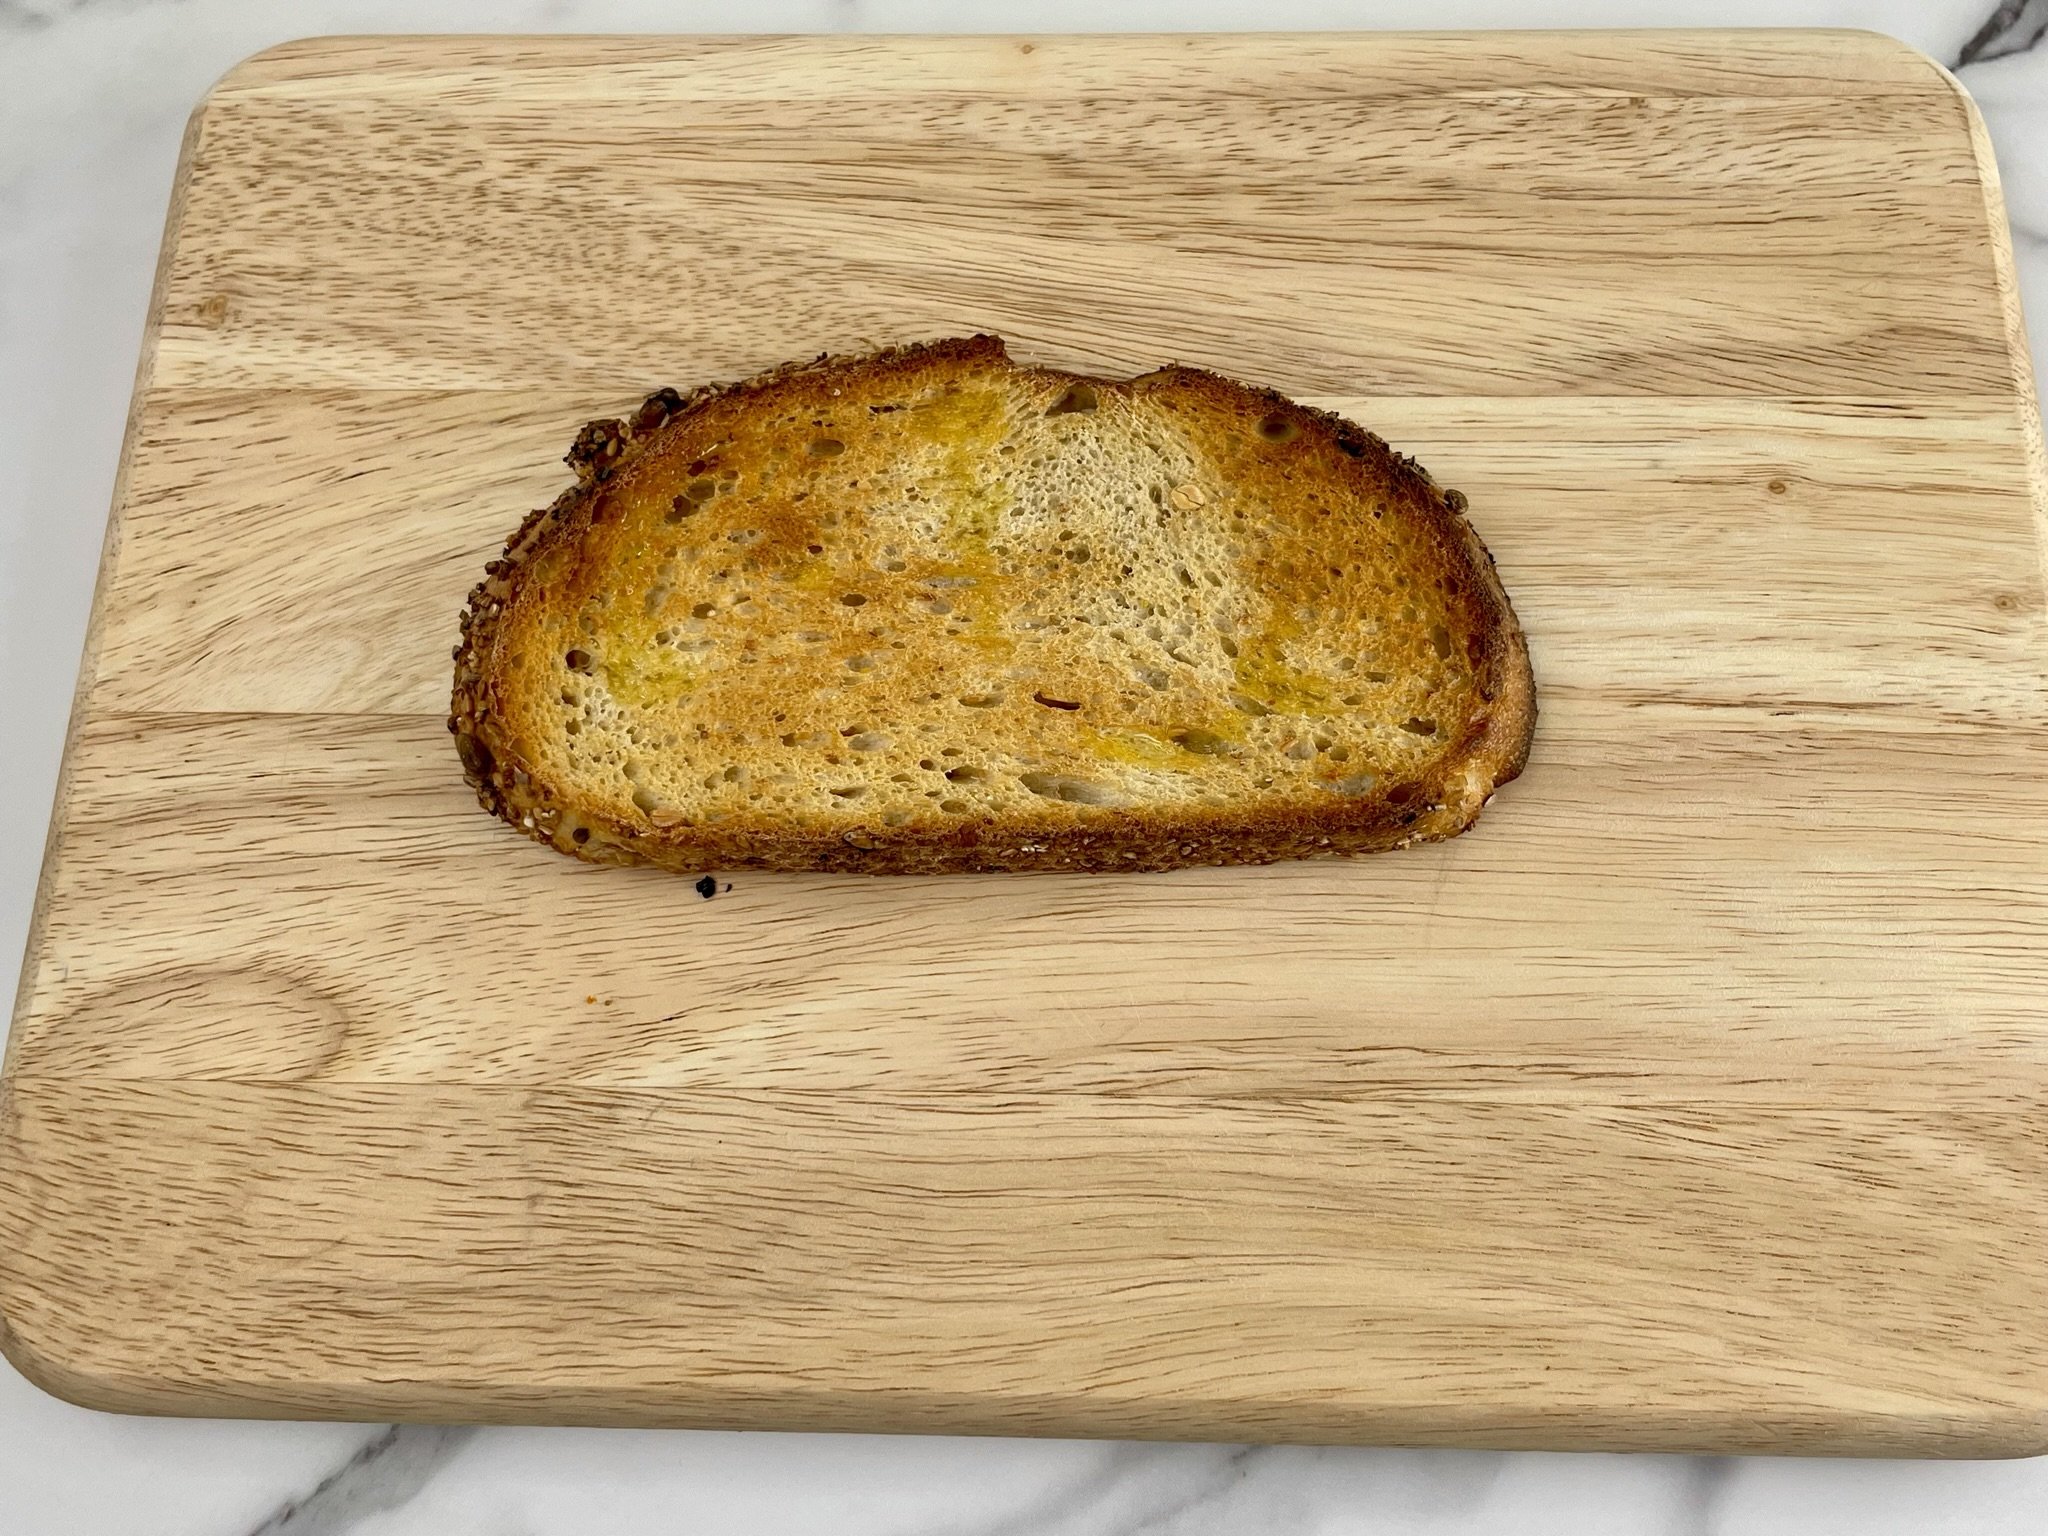 Toasted bread.